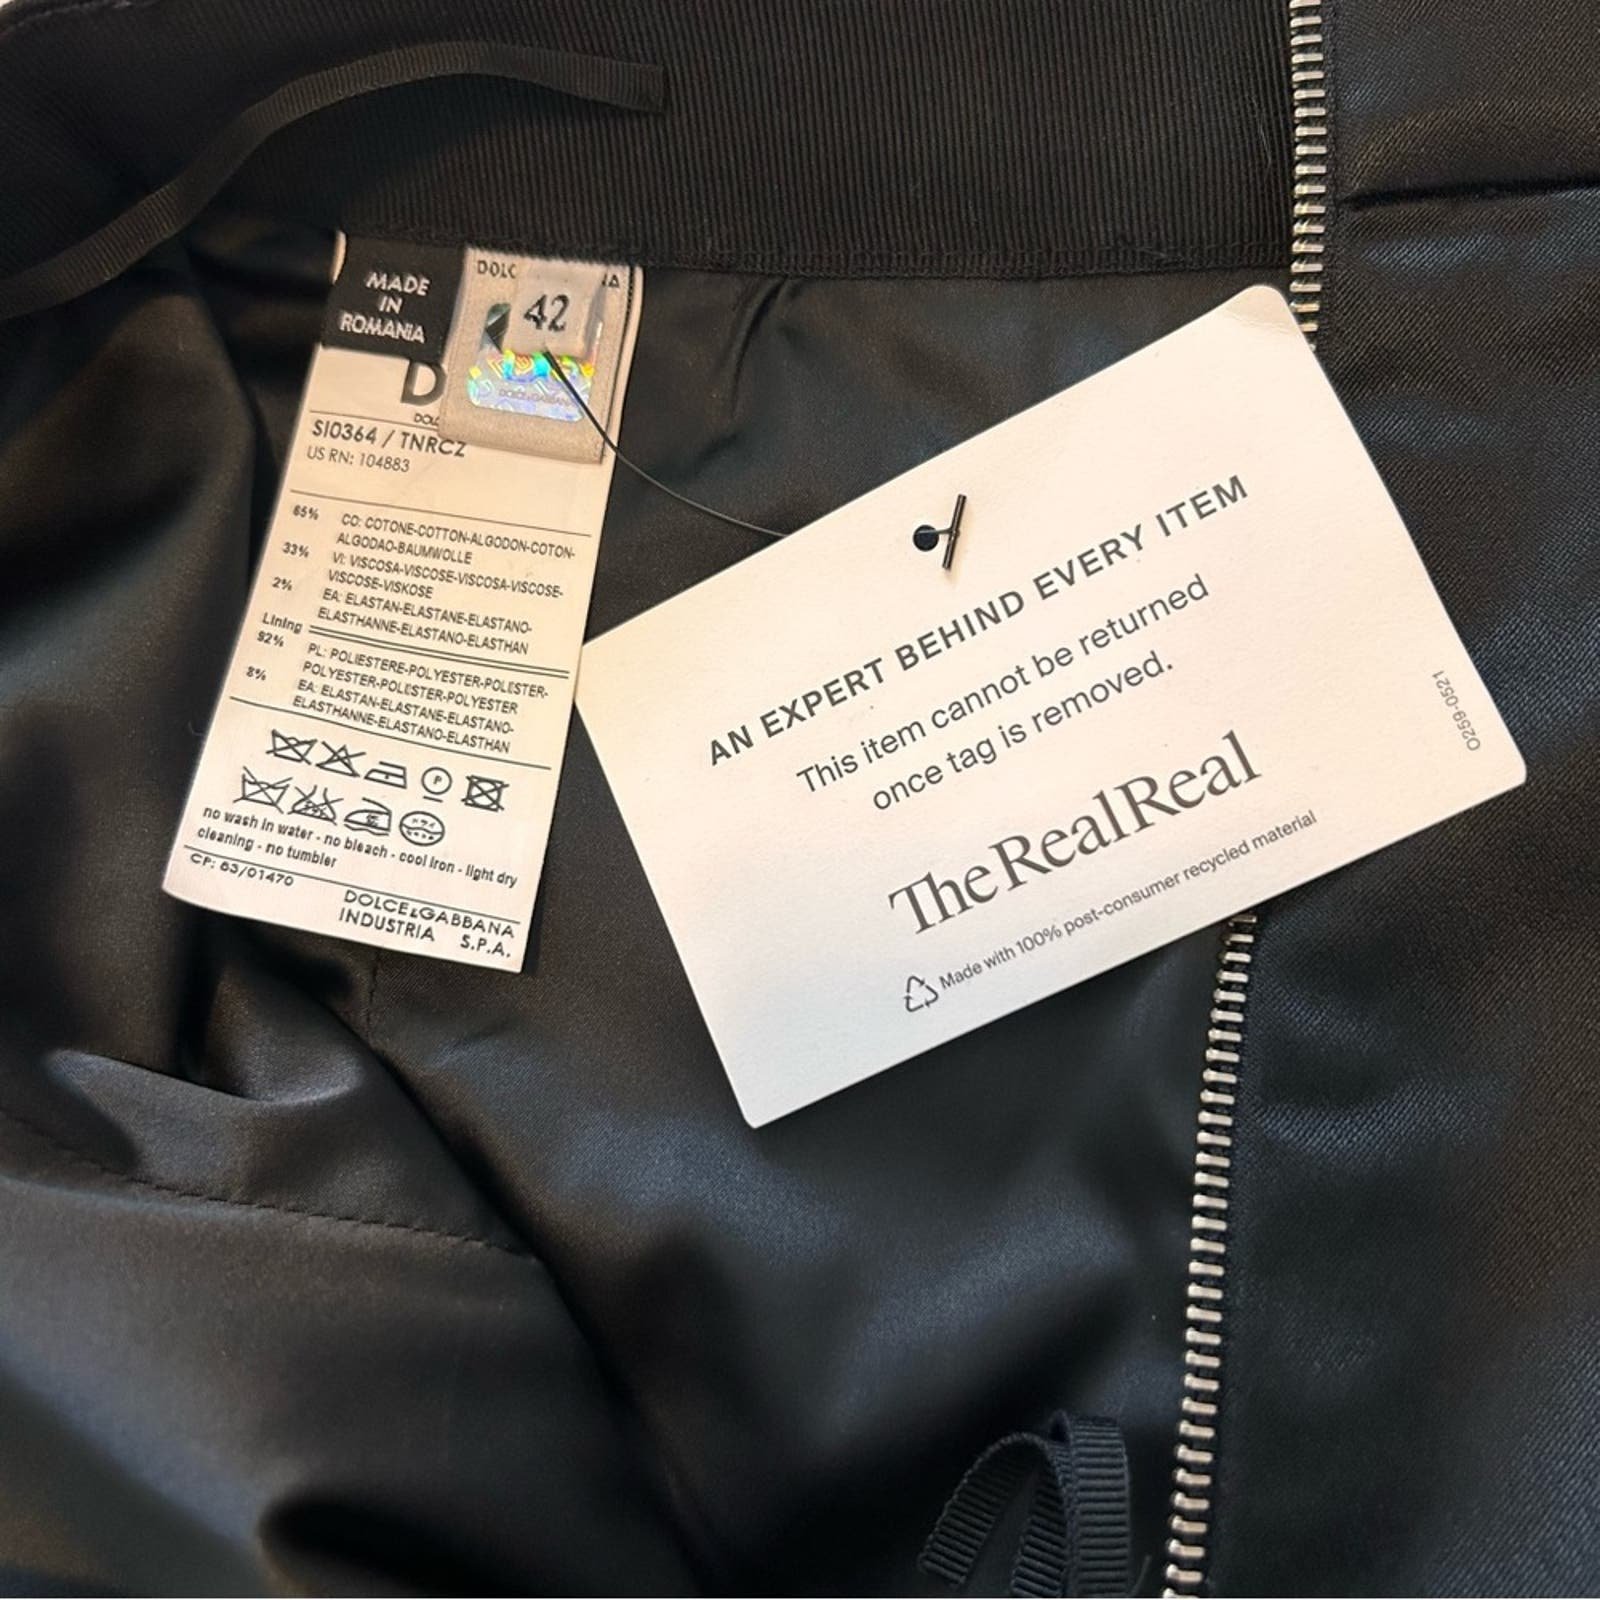 Authentic Dolce & Gabbana Black Exposed Back Zipper Midi Pencil Skirt Size 42 US 6 hd6rvIGL2 best sale